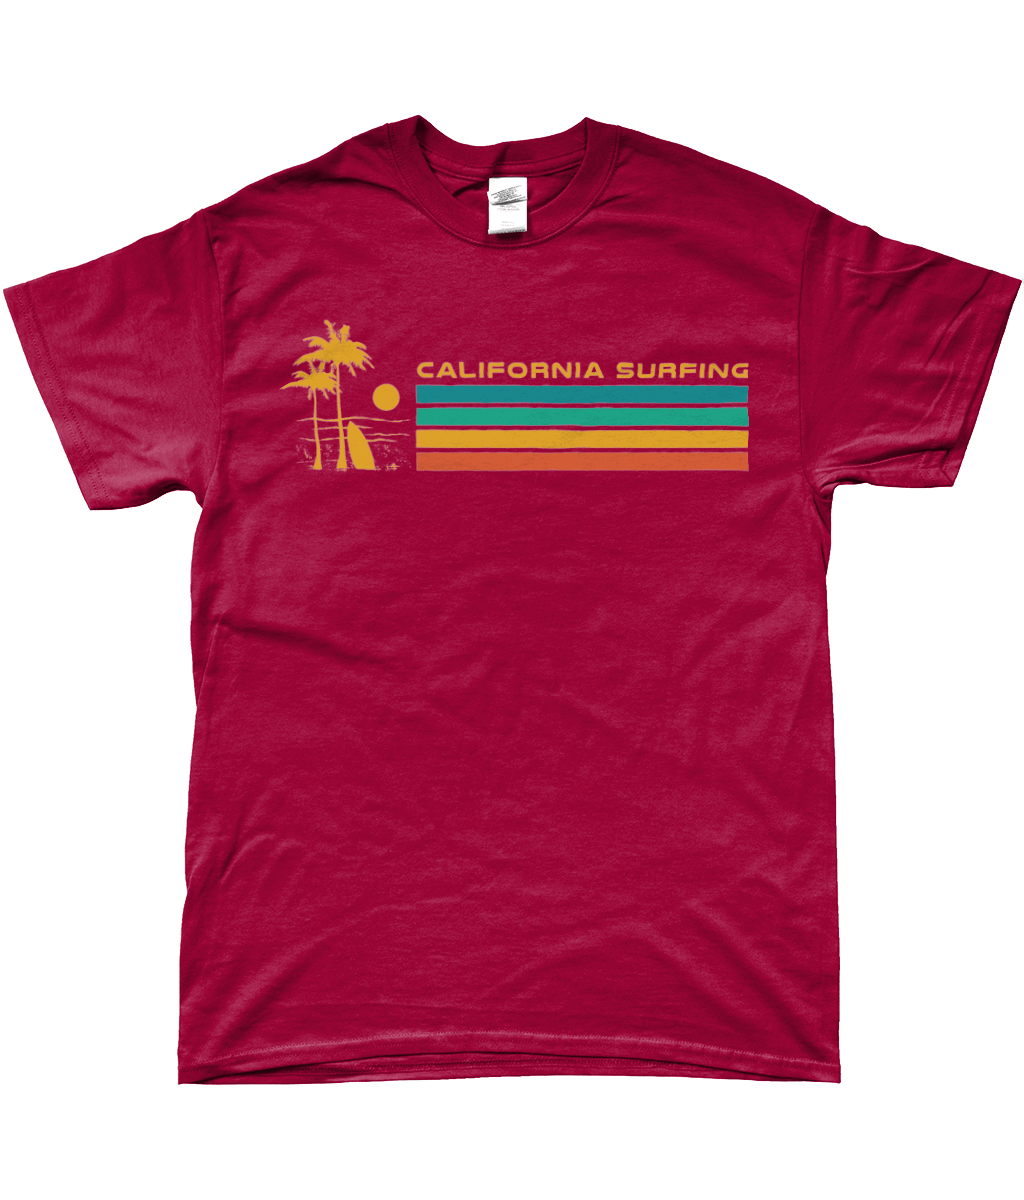 California Surfing – Gildan Softstyle® Ringspun T-shirt